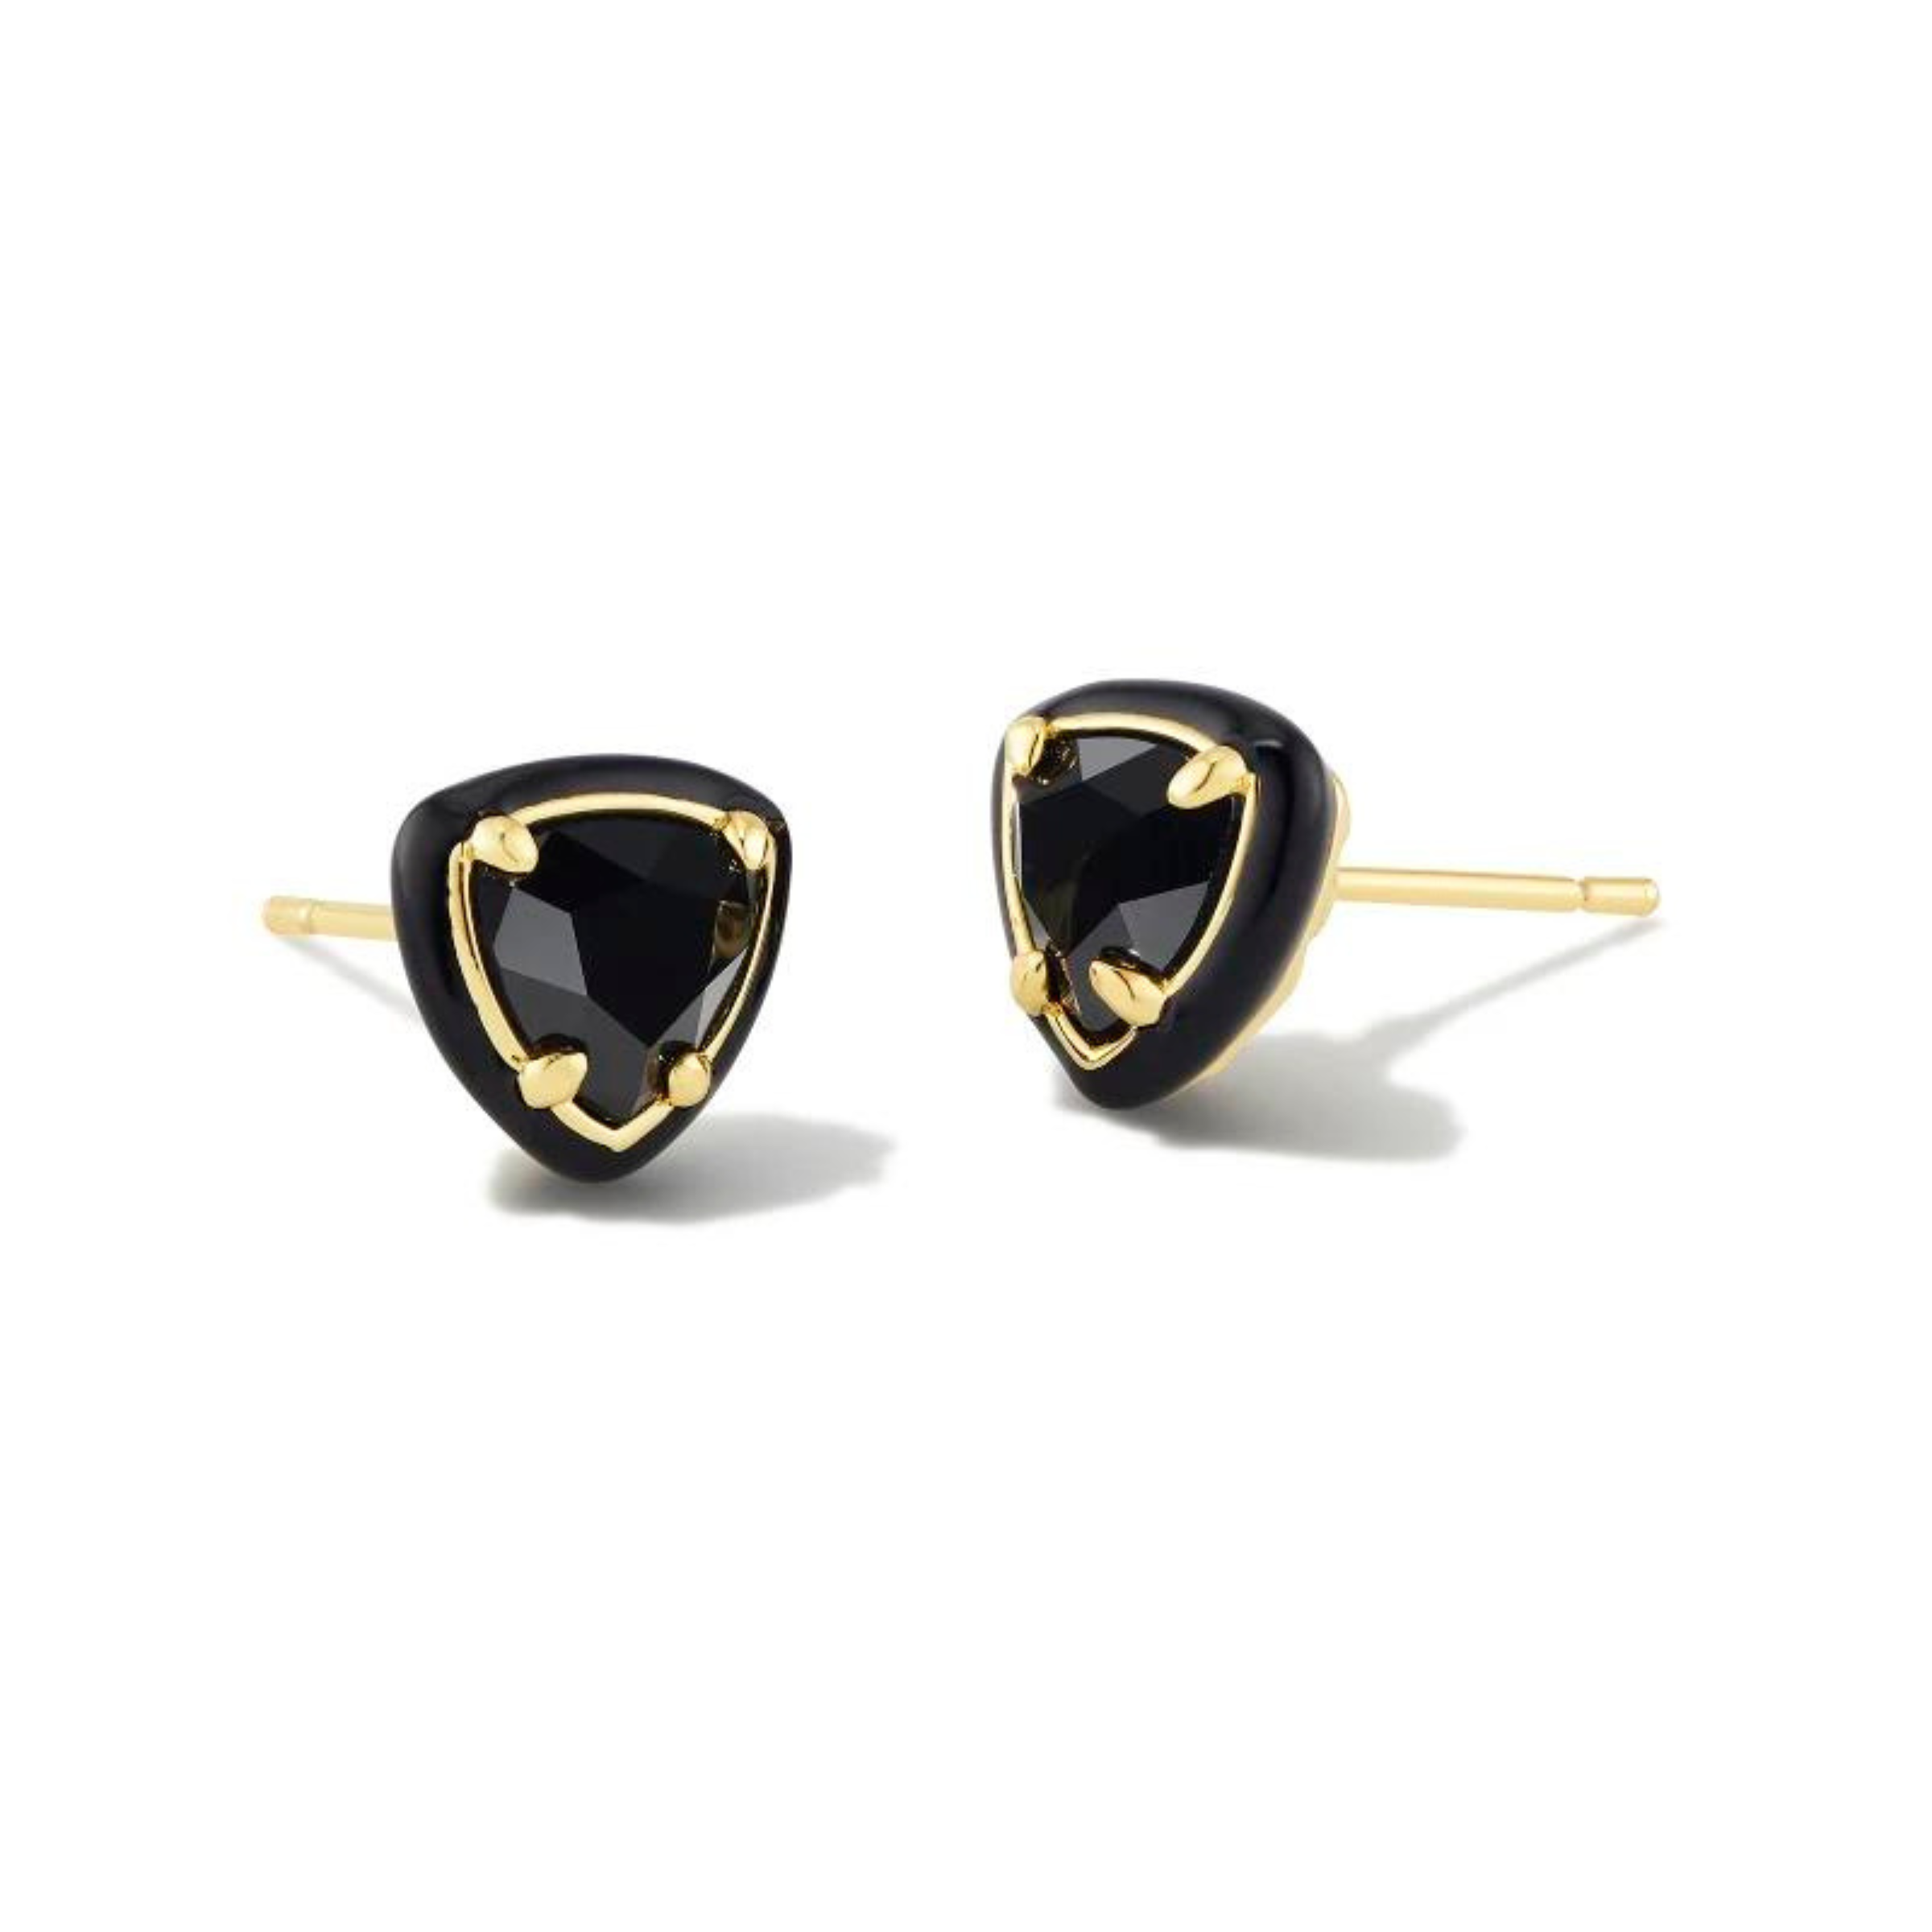 Kendra Scott | Arden Gold Enamel Framed Stud Earrings in Black Agate - Giddy Up Glamour Boutique